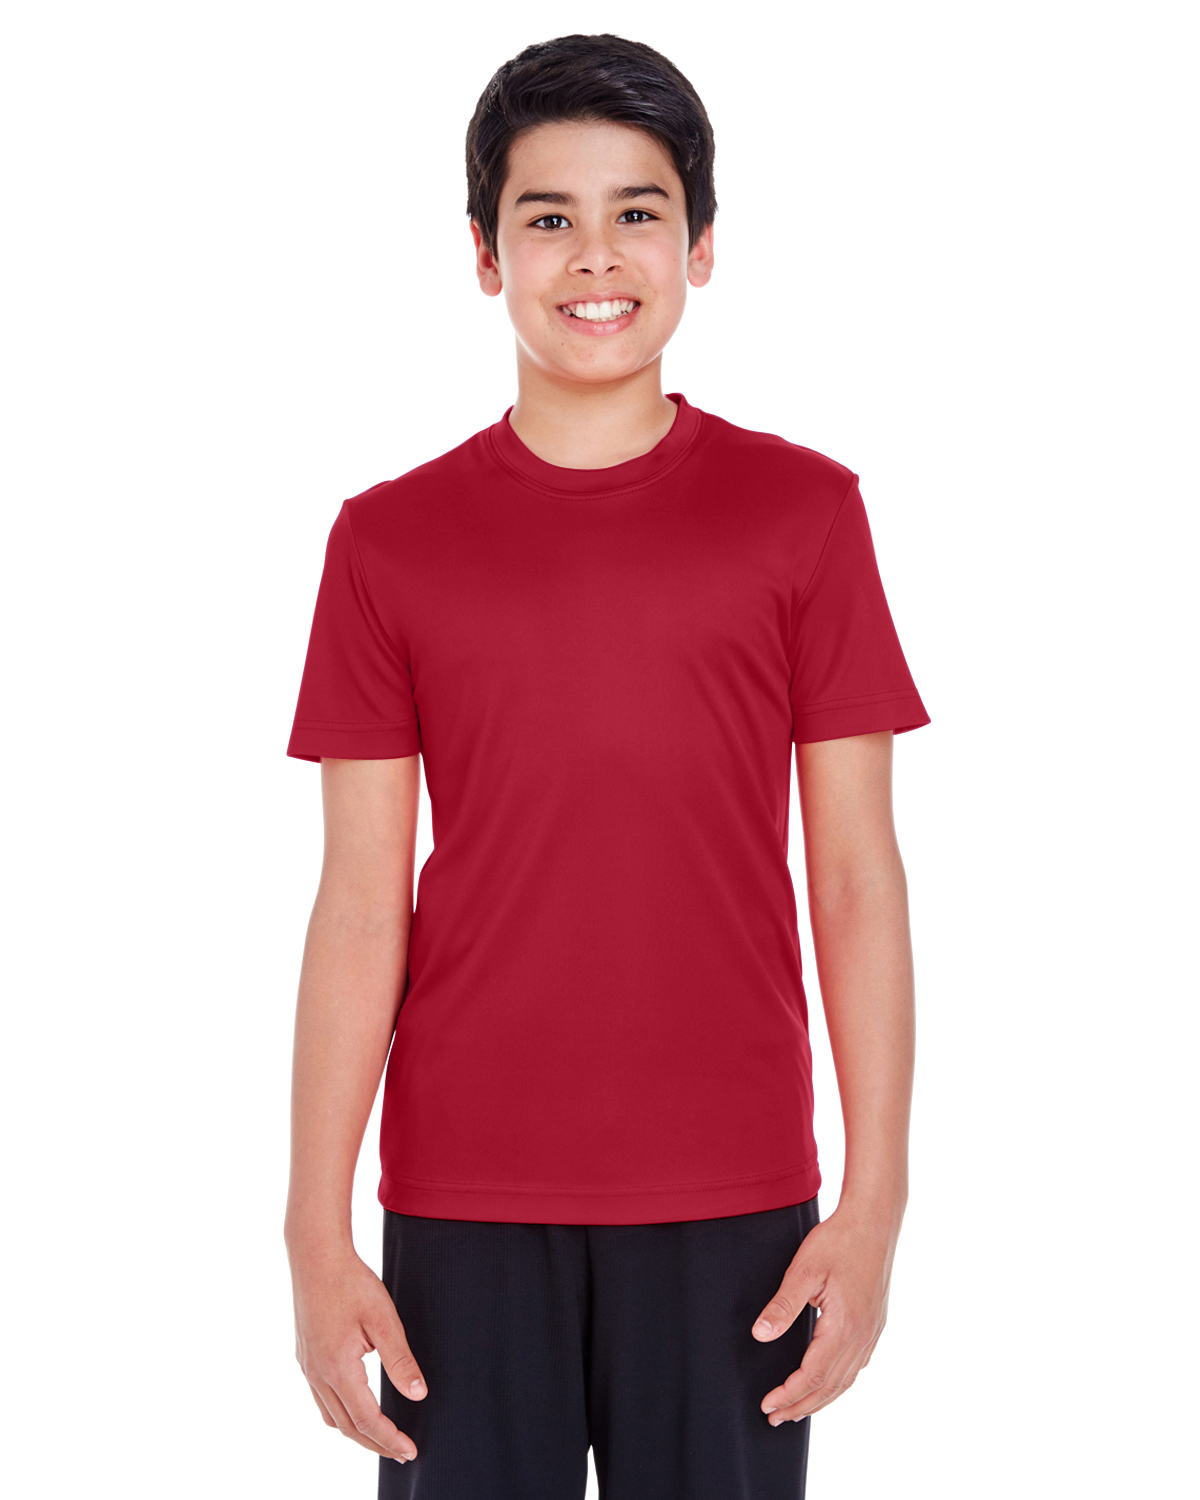 School Uniform Sportshirt Red size Youth Large 14-16